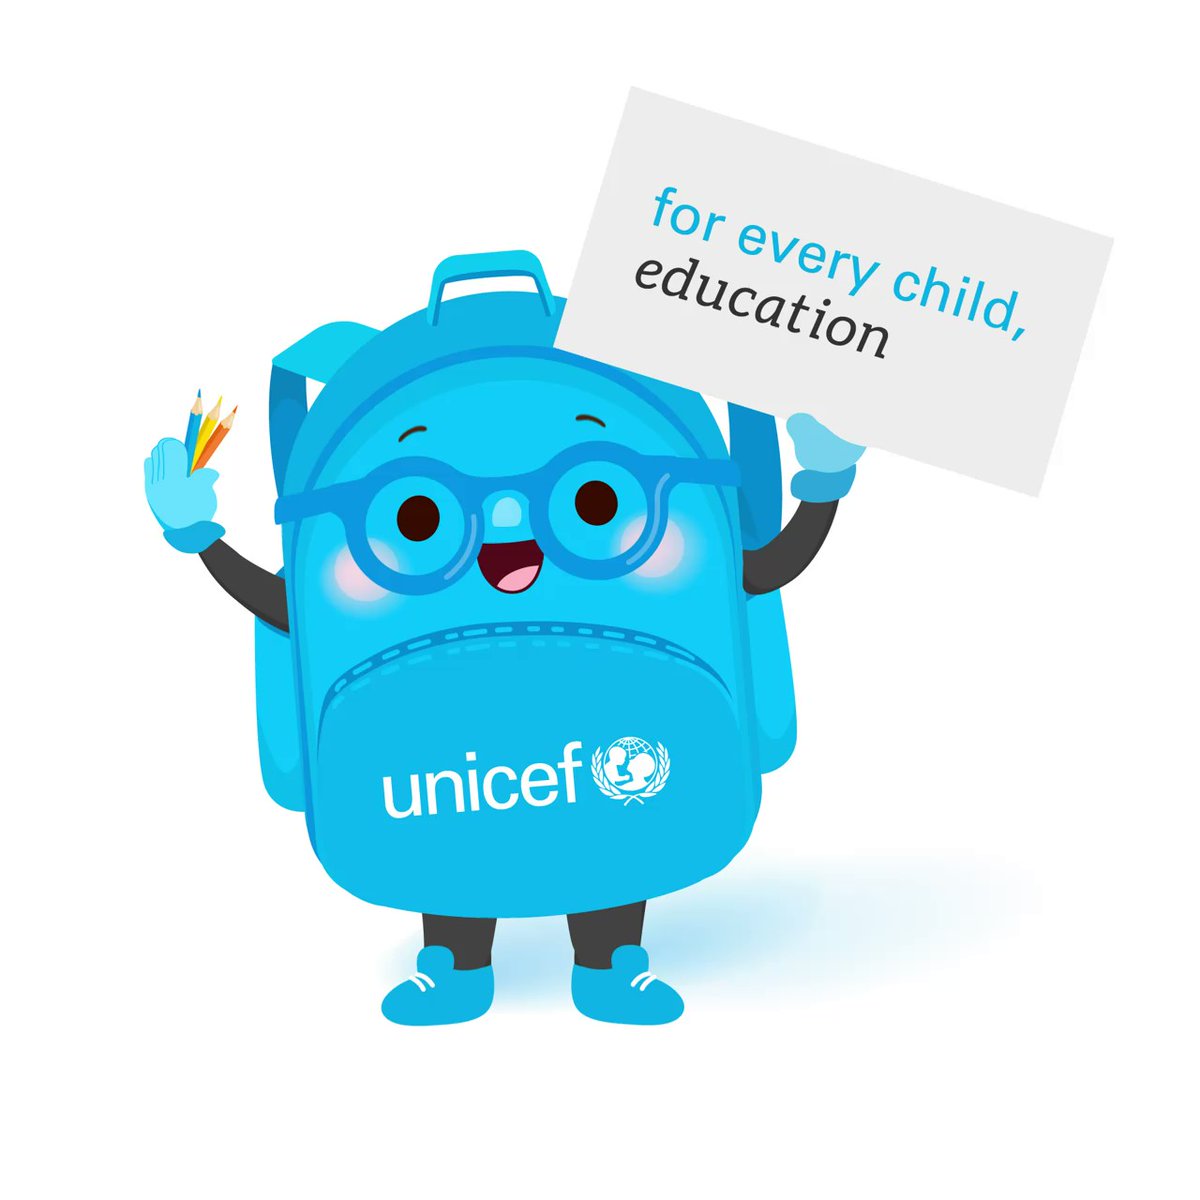 UNICEF launches Global Education Mascot